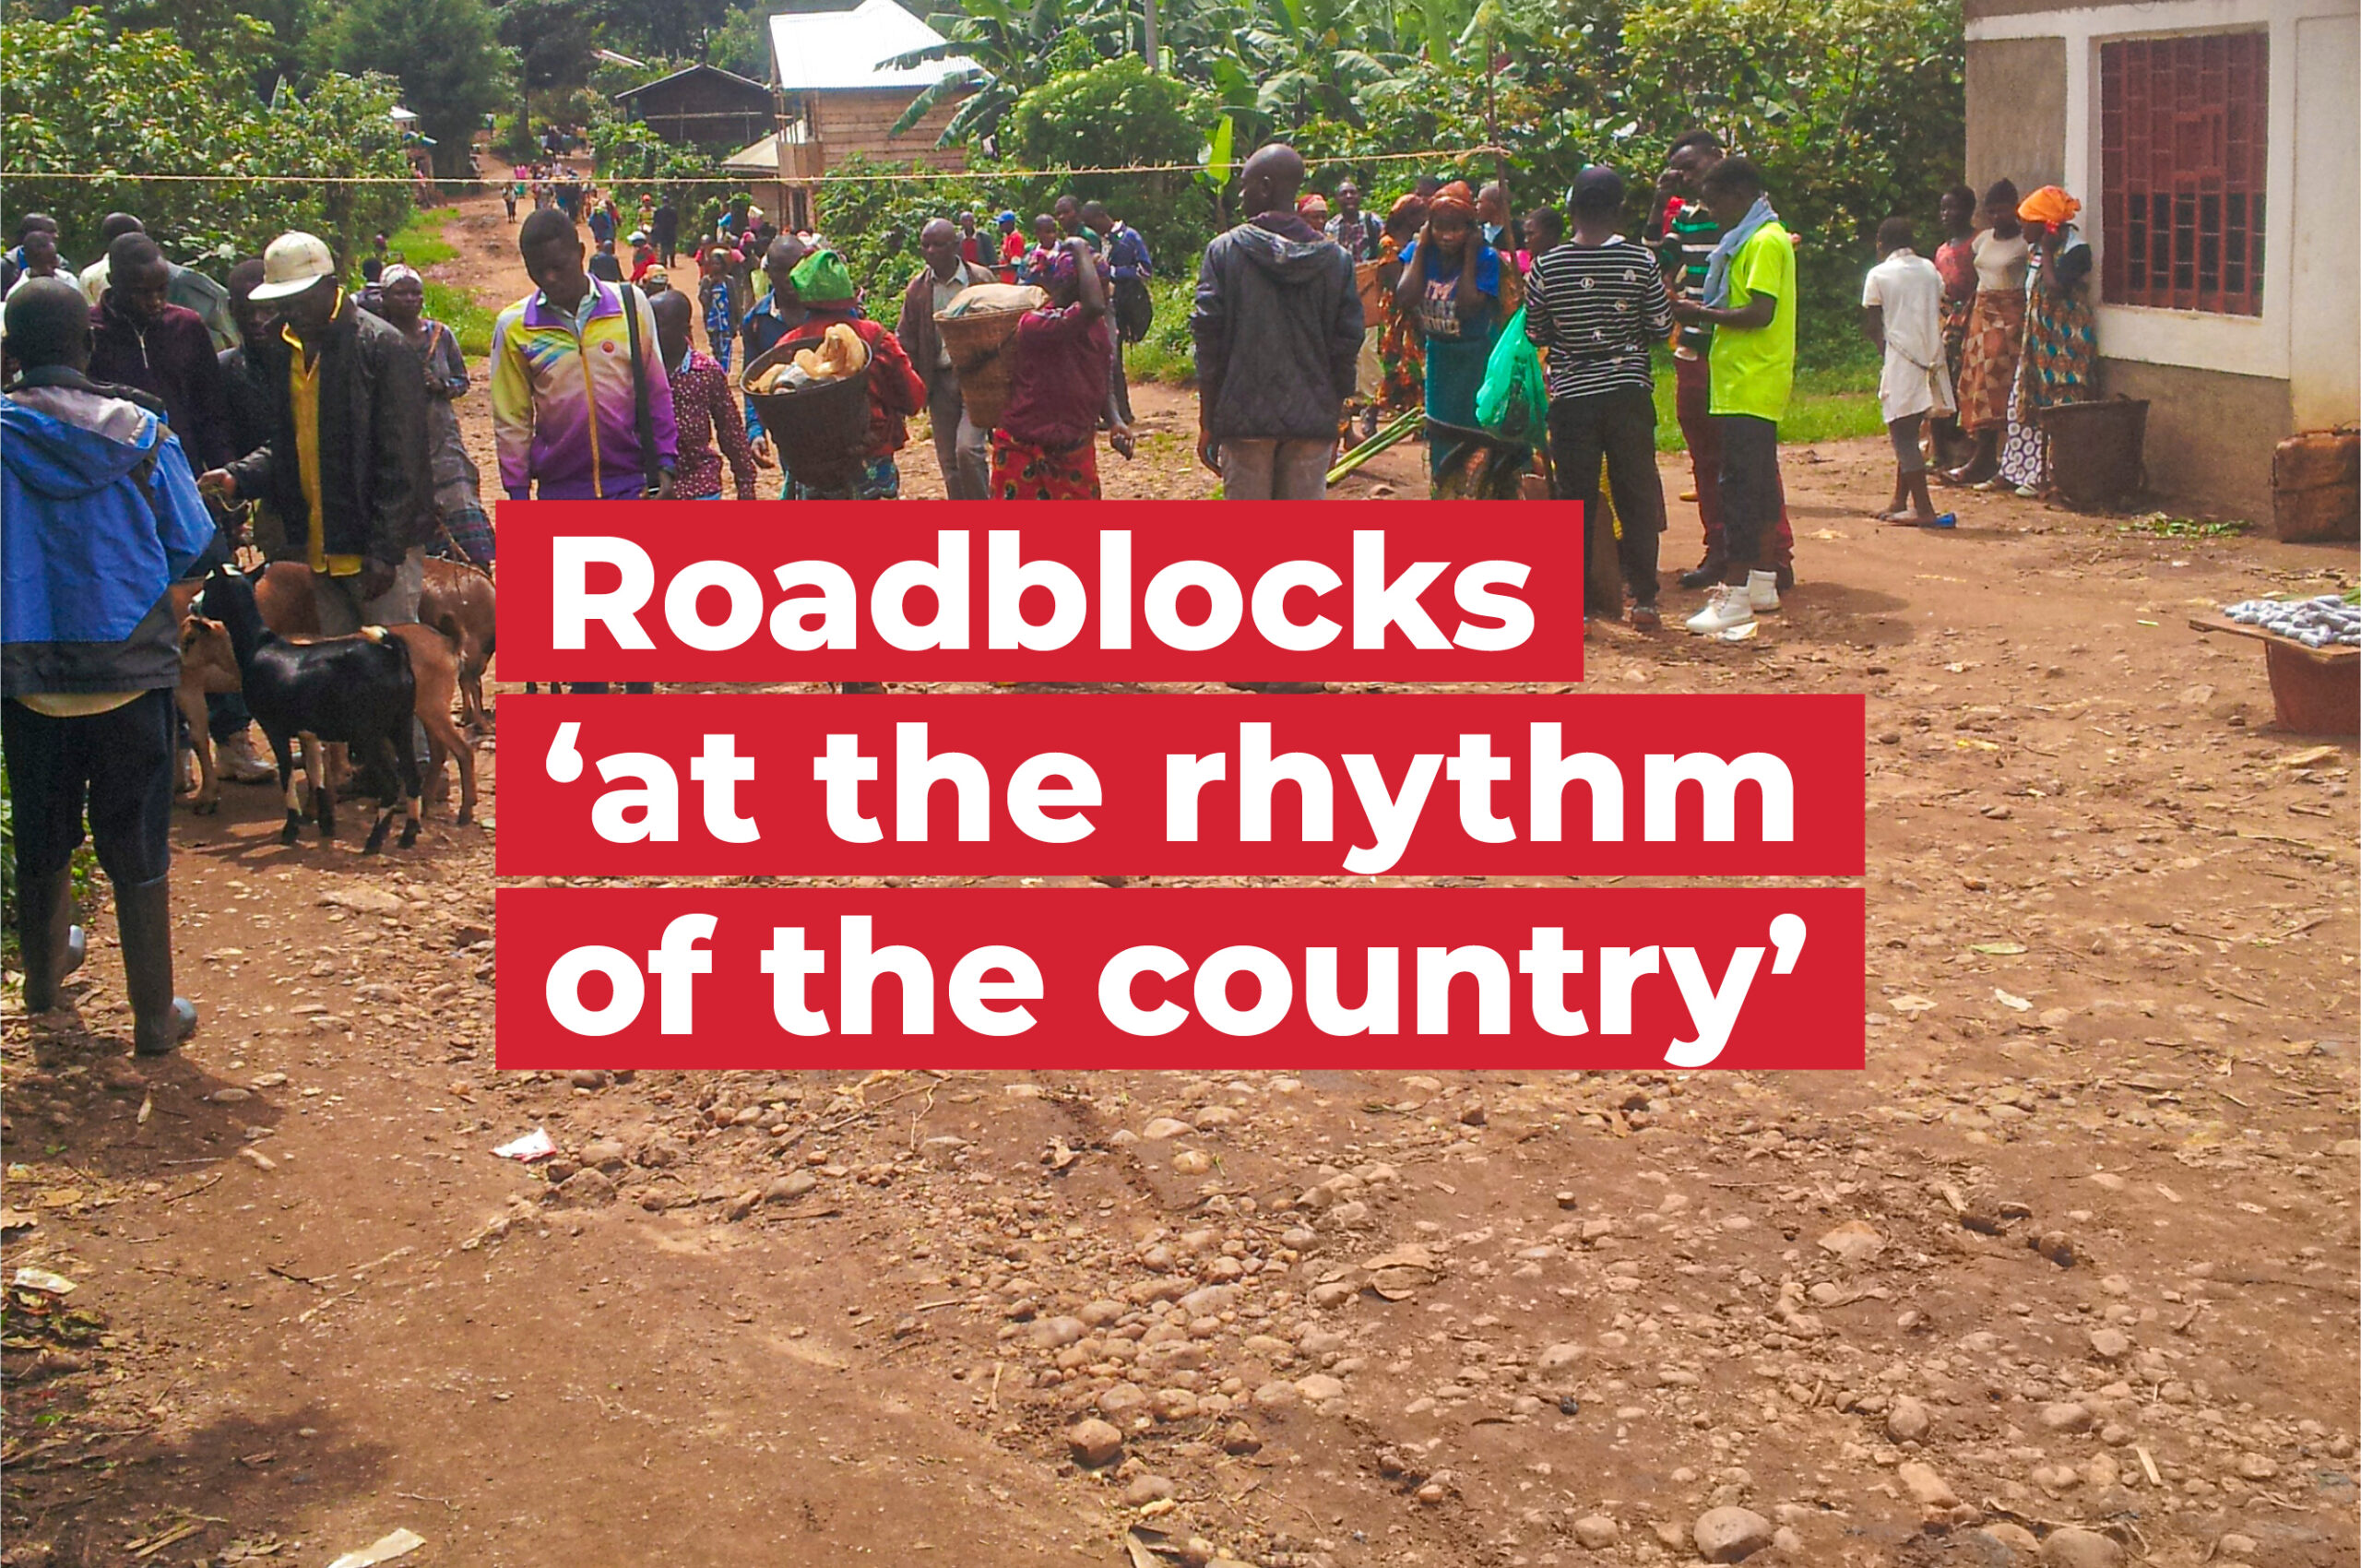 08_GIC_Roadblocks_at the rhythm of the country_2